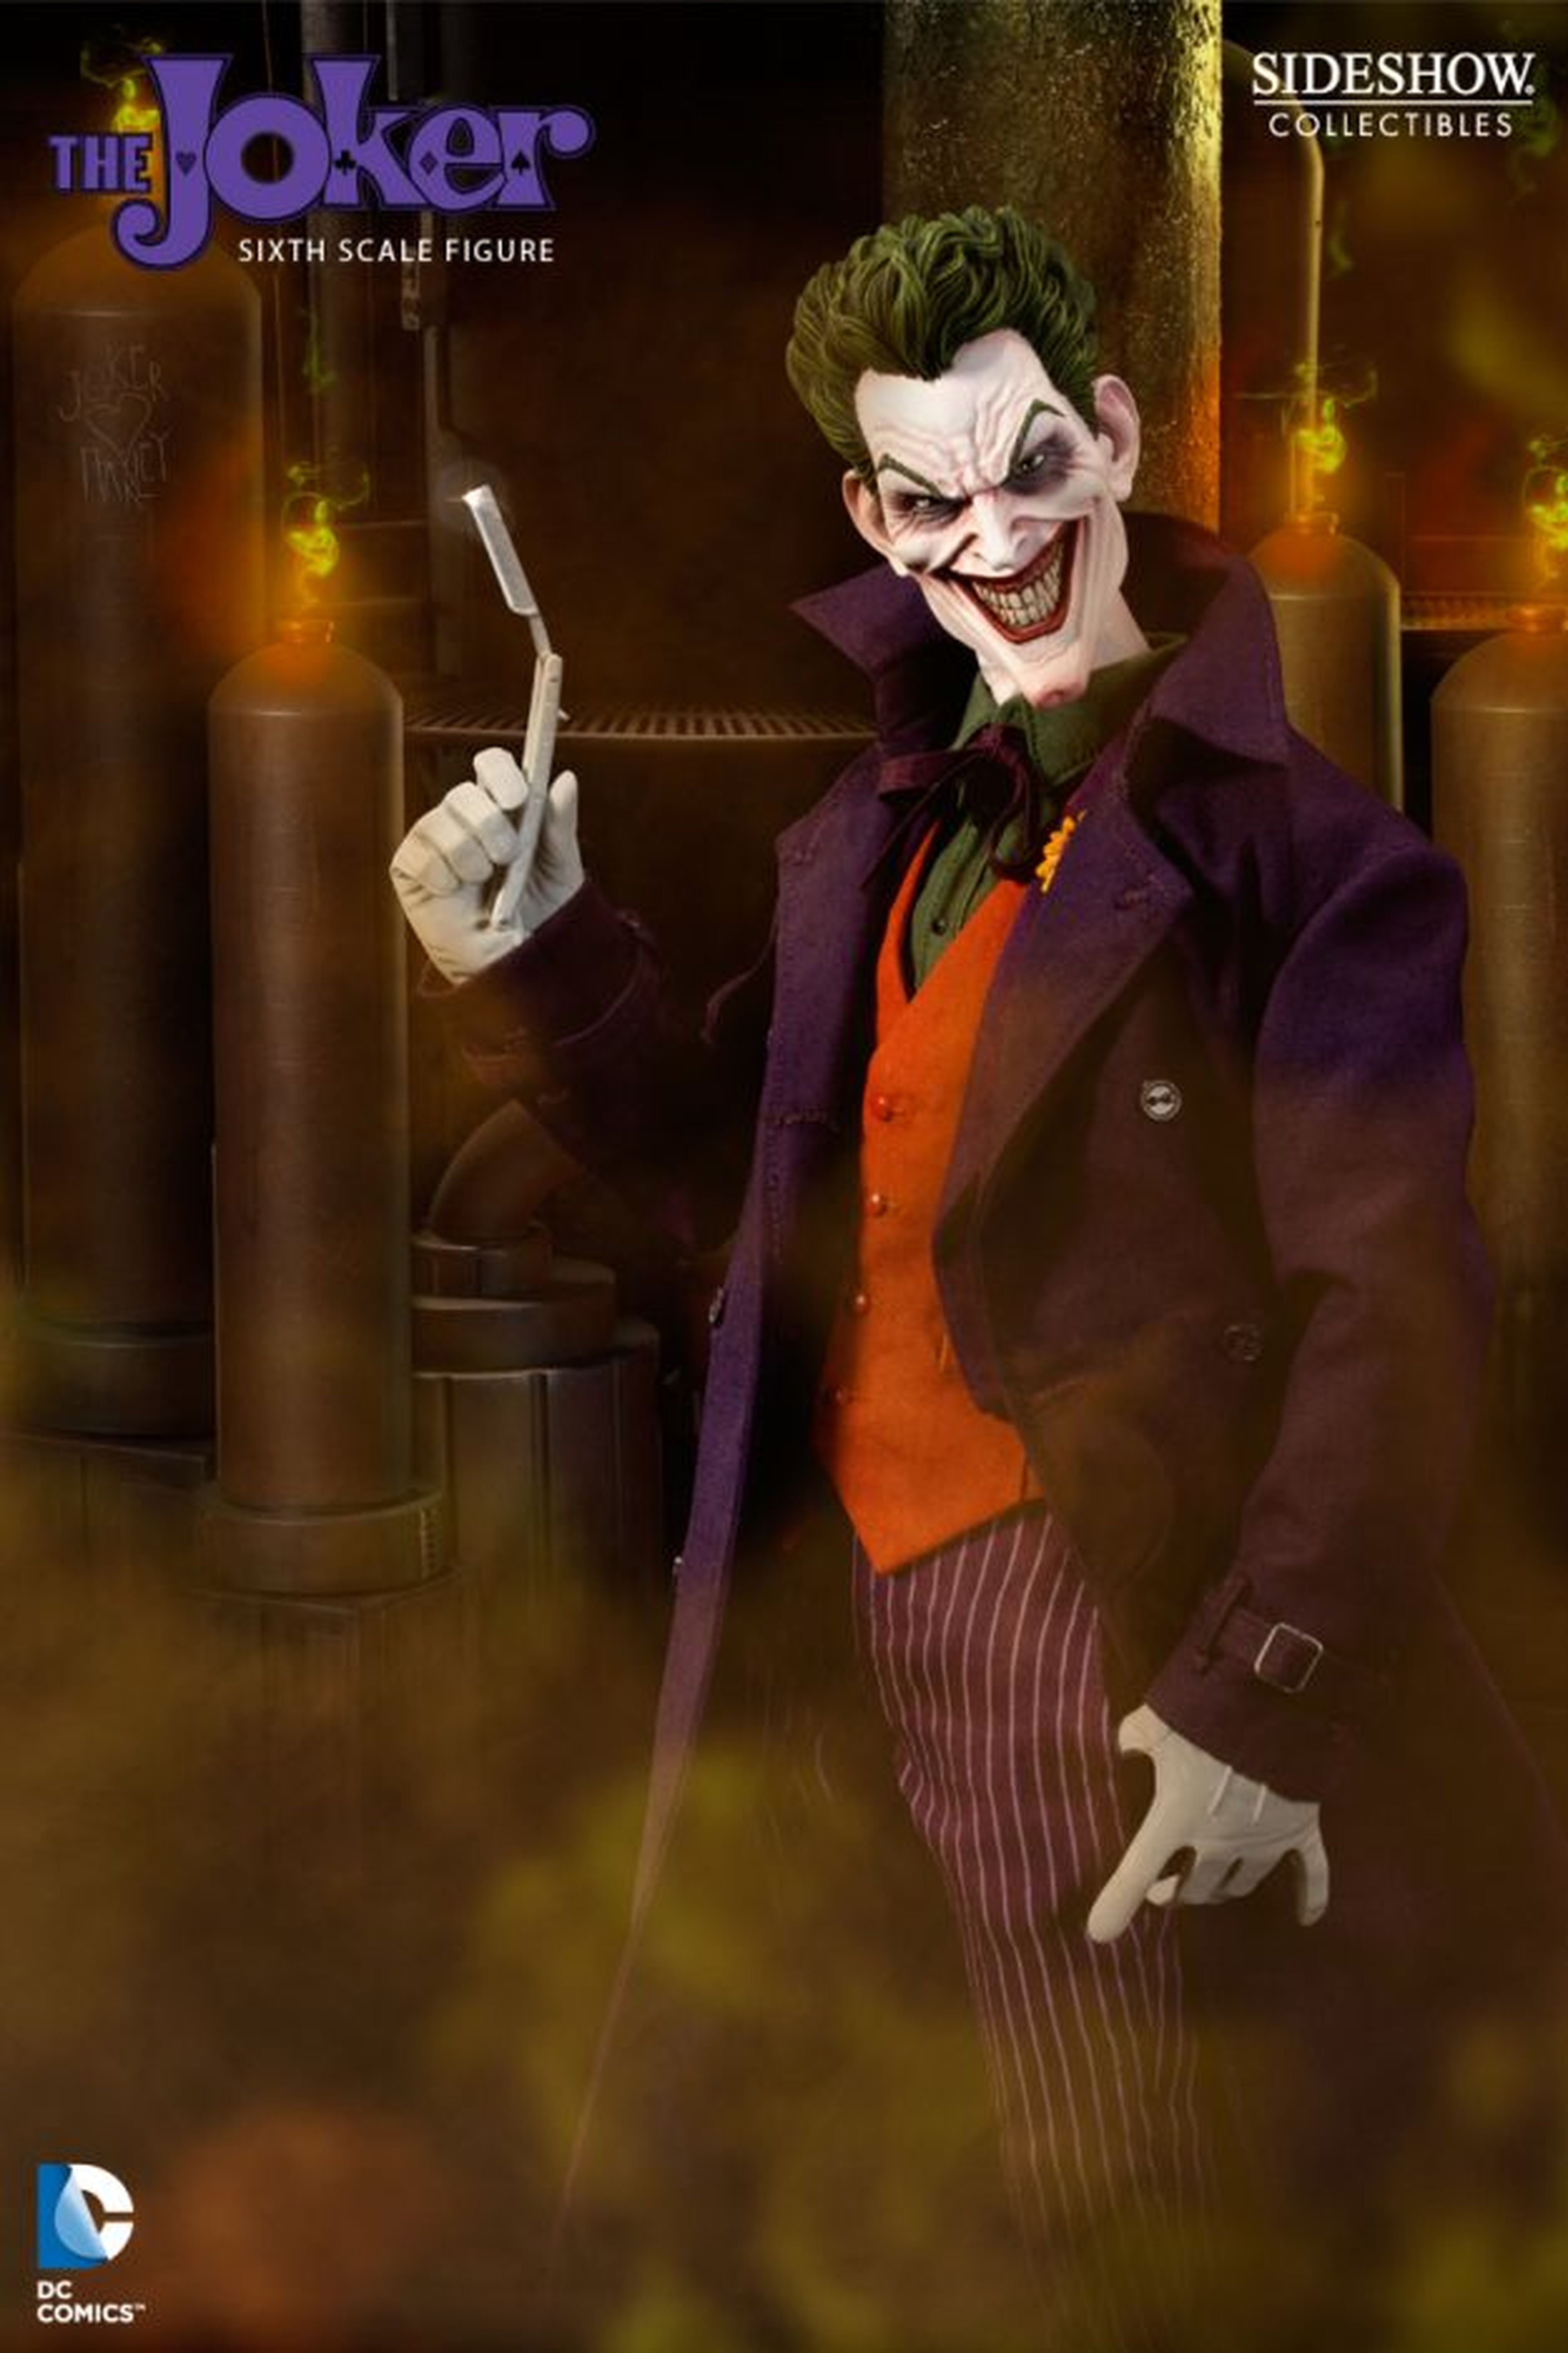 El Joker de Sideshow, revelado